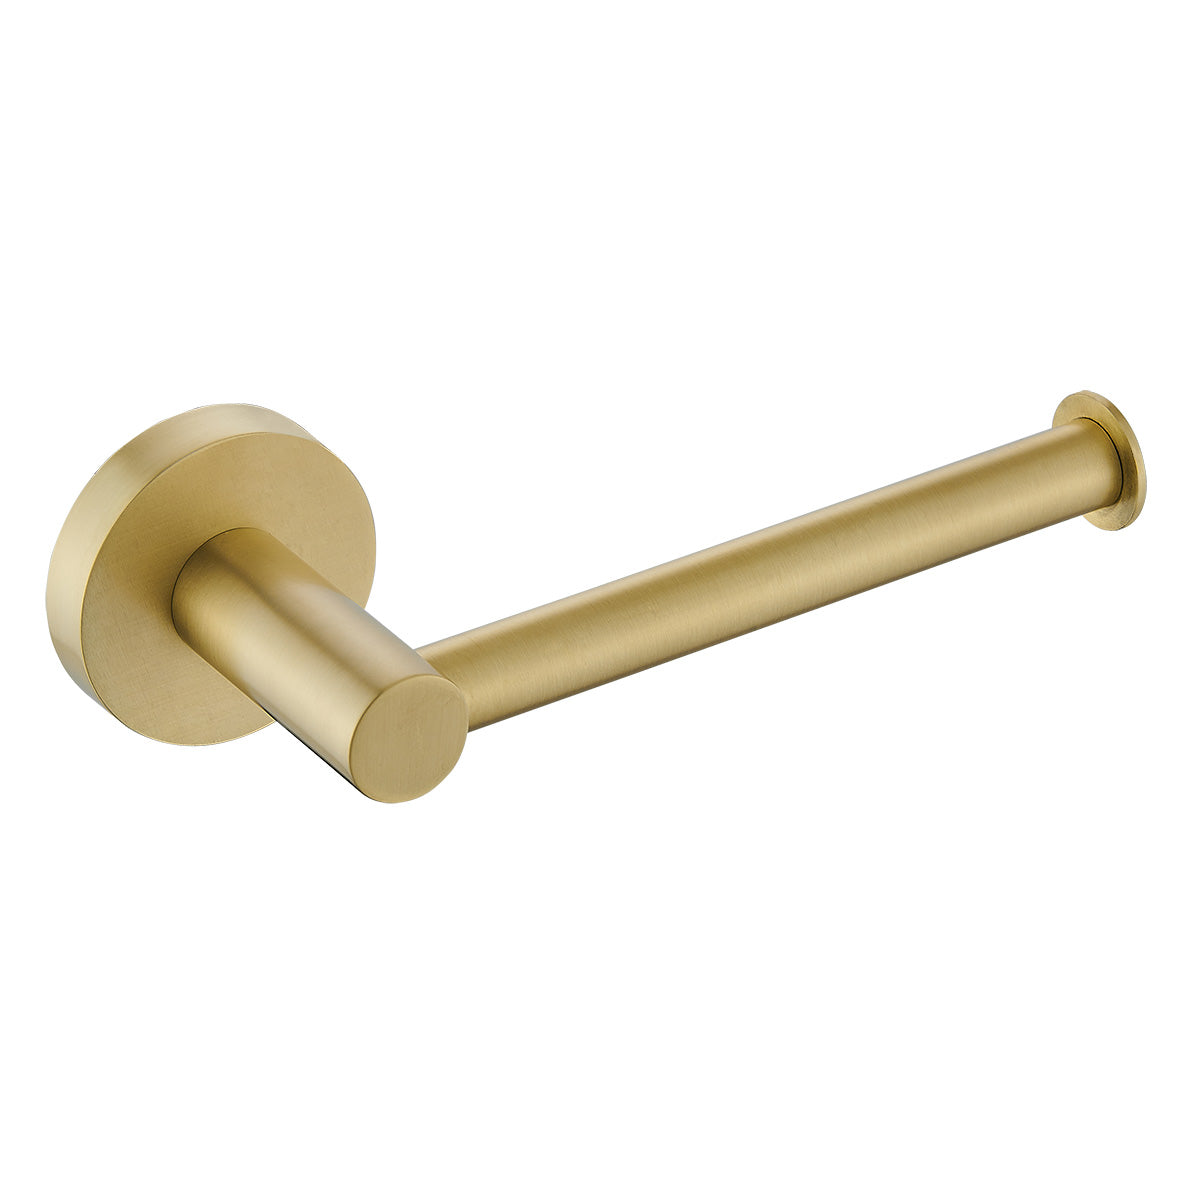 Hellycar BA855 (BG) Ideal Toilet Roll Holder (Brushed Gold) – Brushed Gold Bathroom Accessory